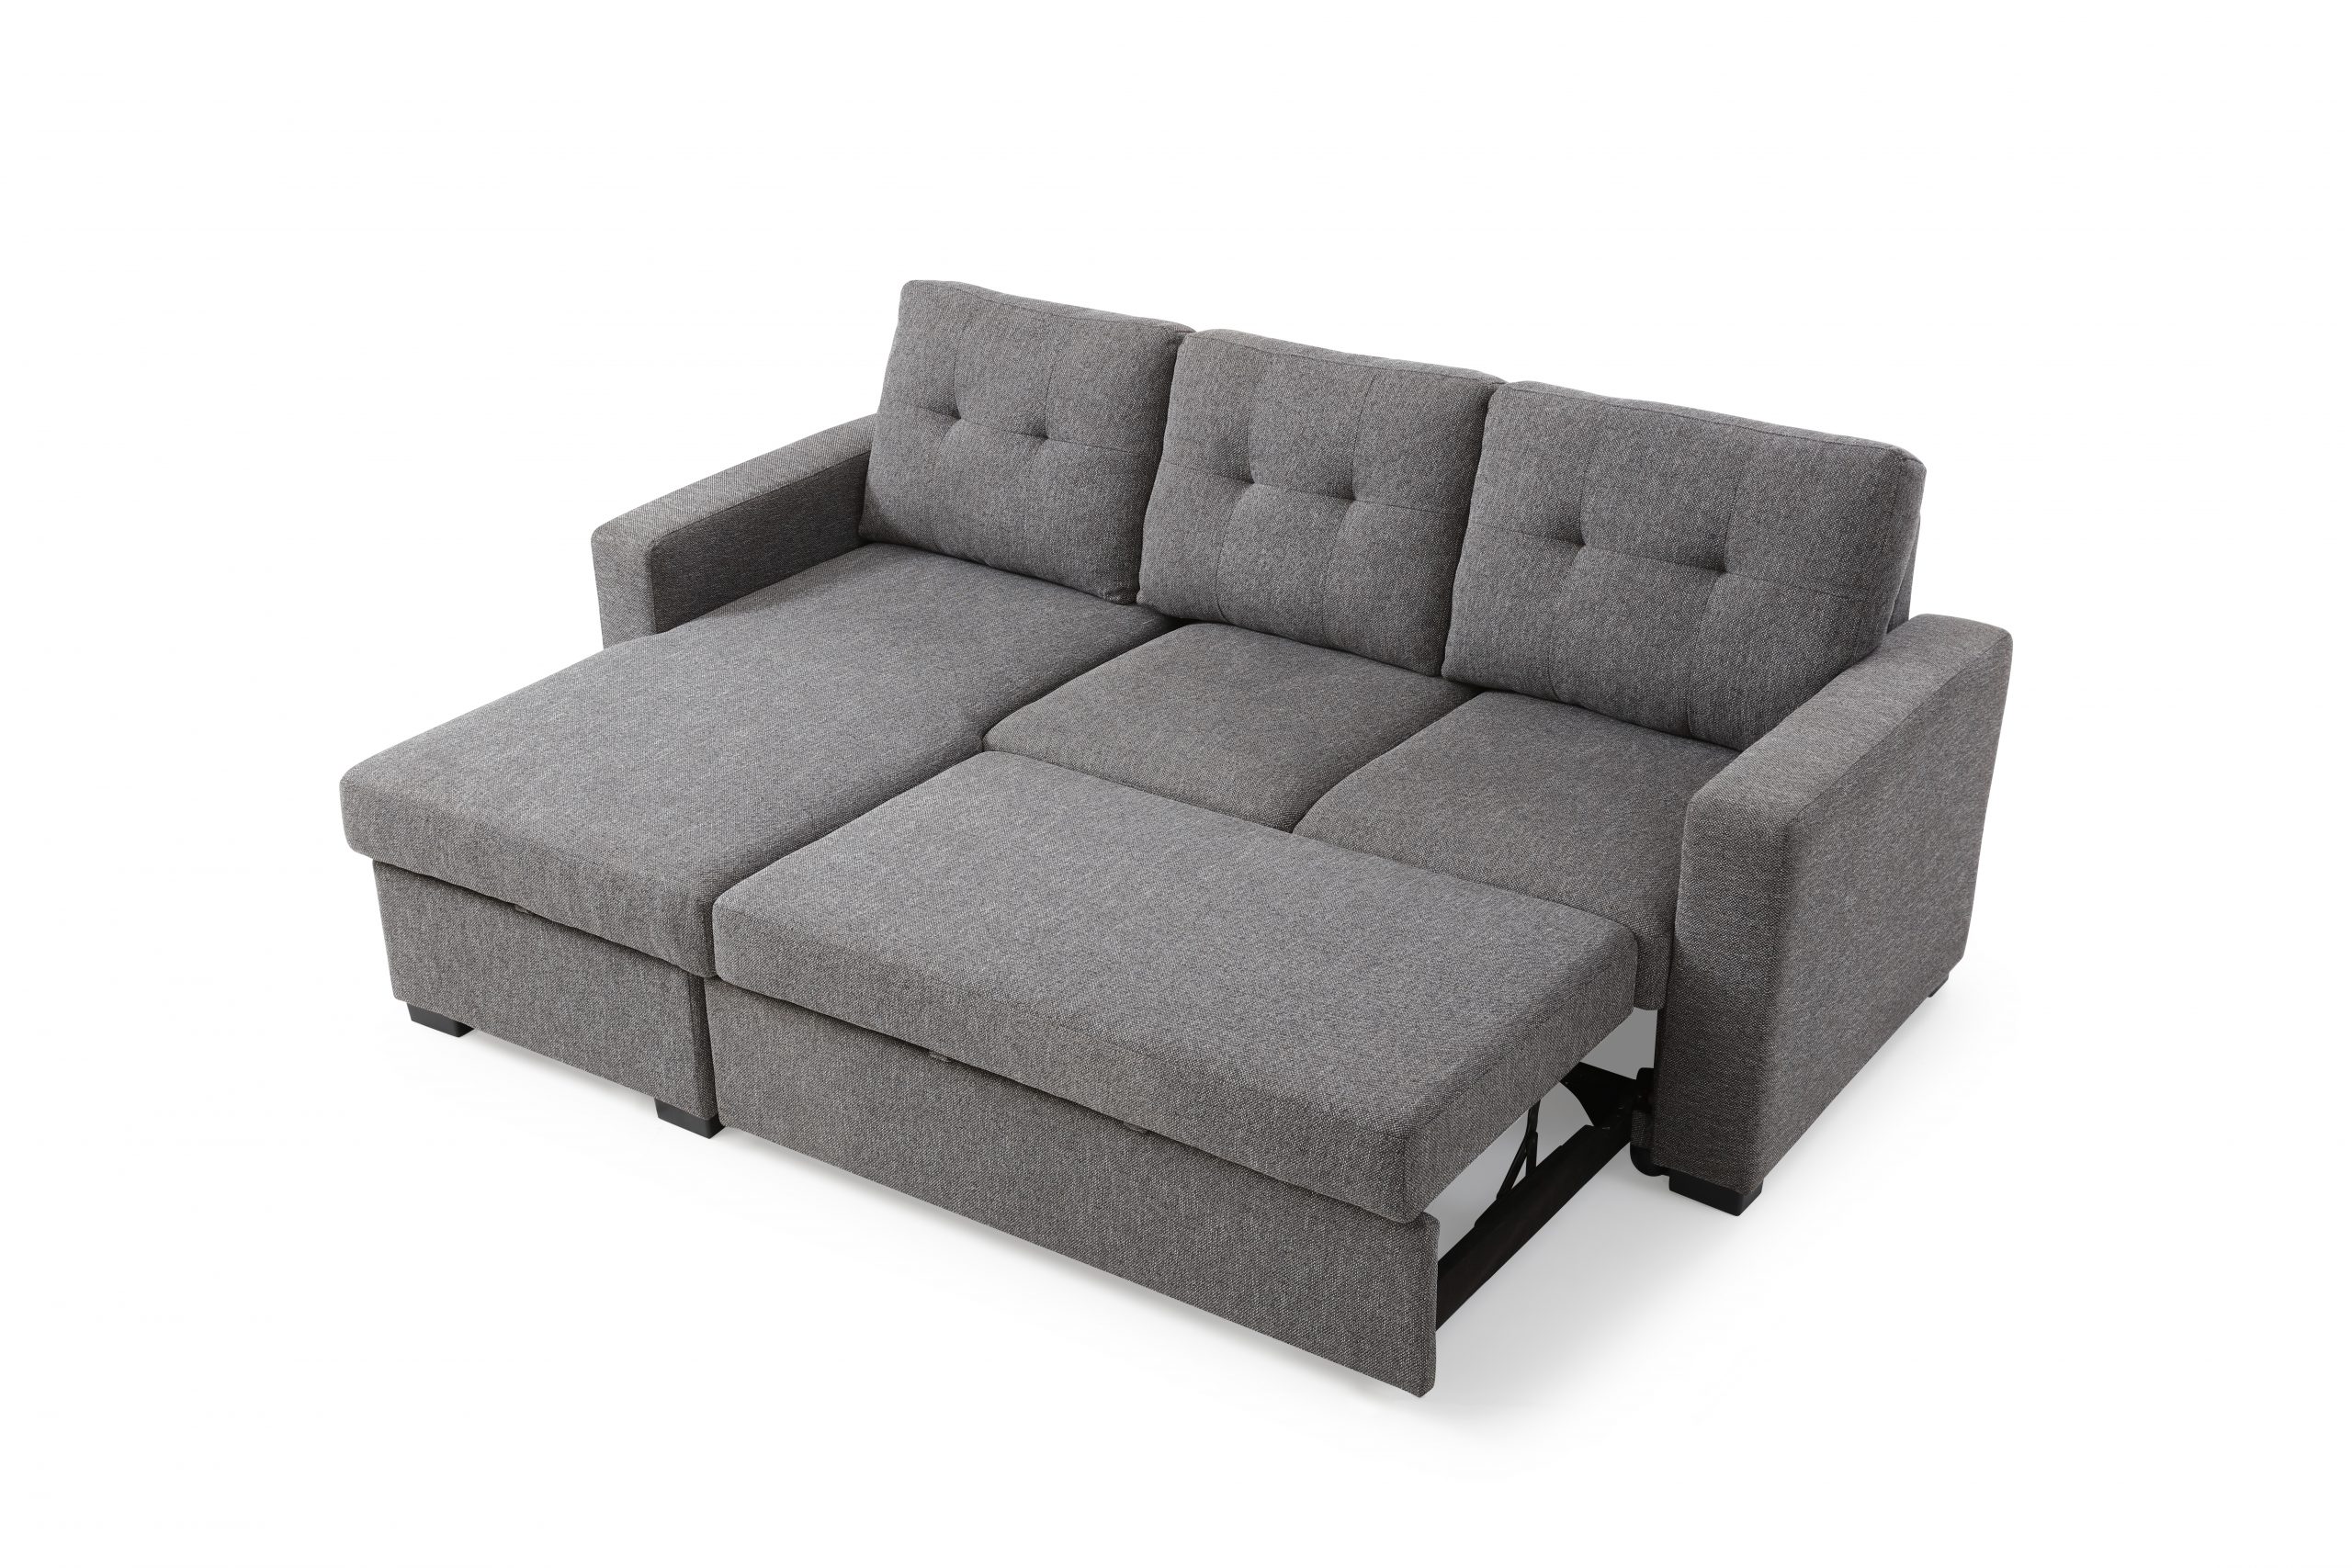 black and grey sofa beds